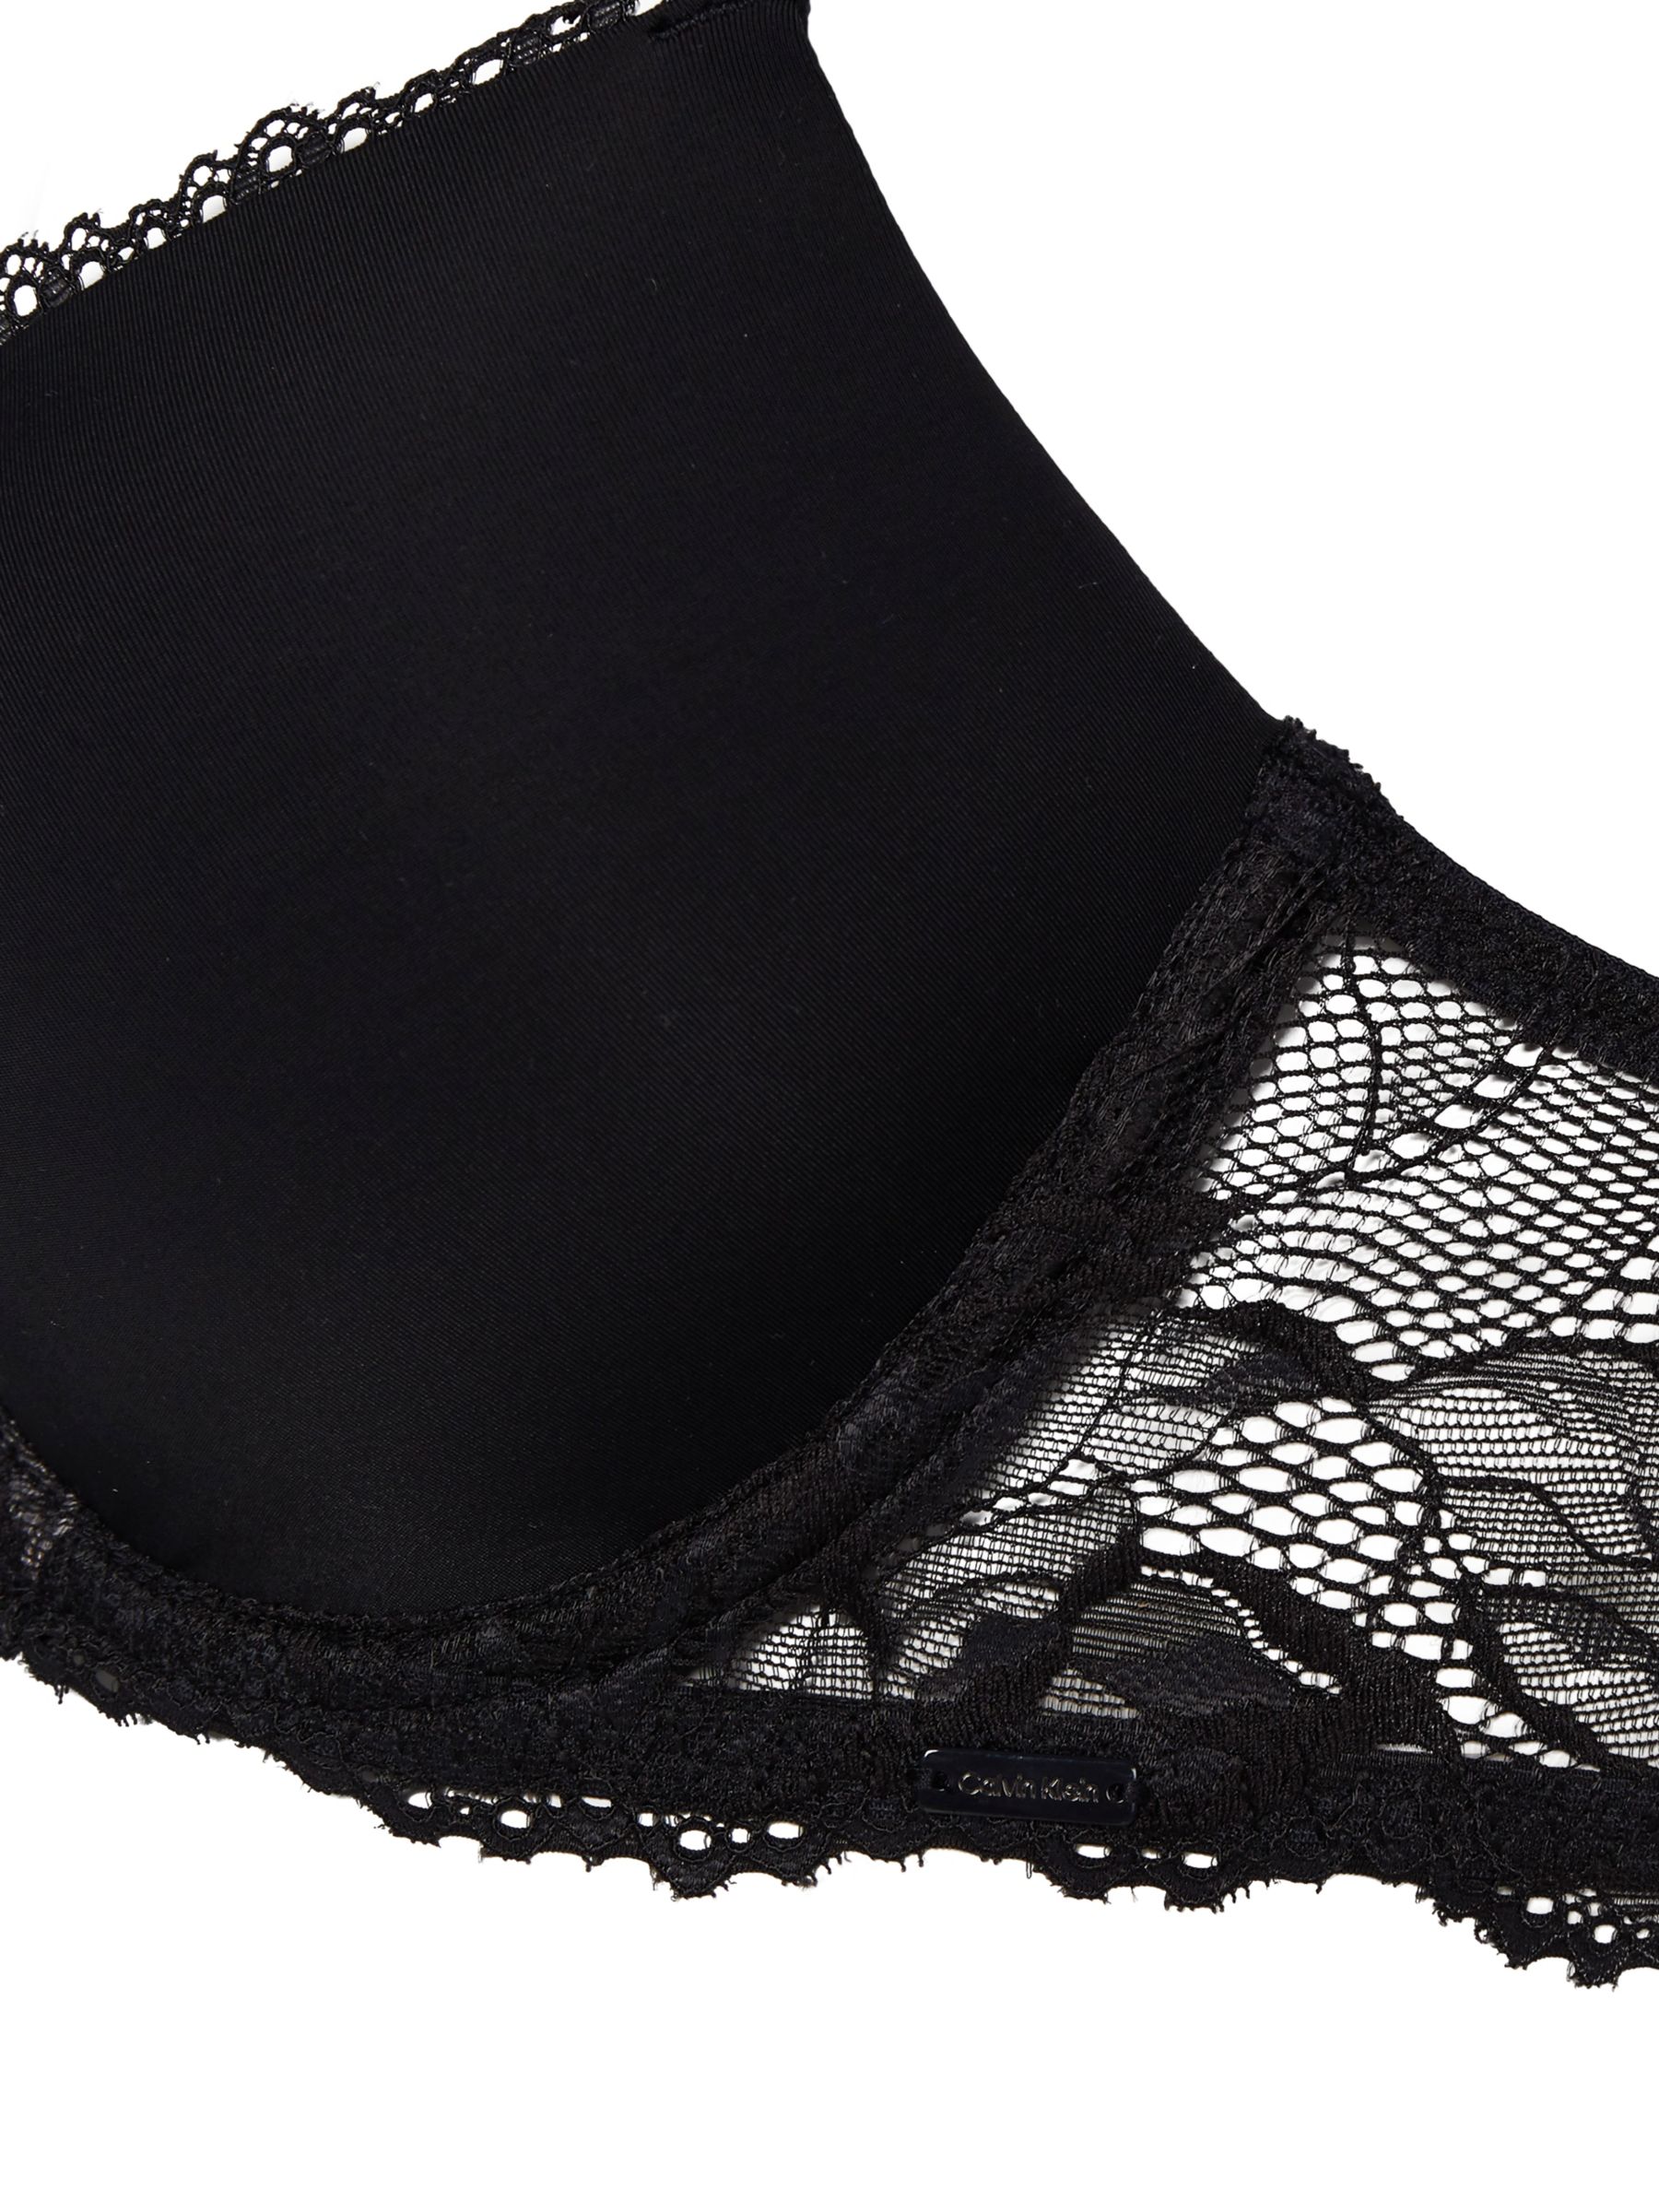 calvin klein underwear seductive comfort customized lift sexy contour bra  f3274 black